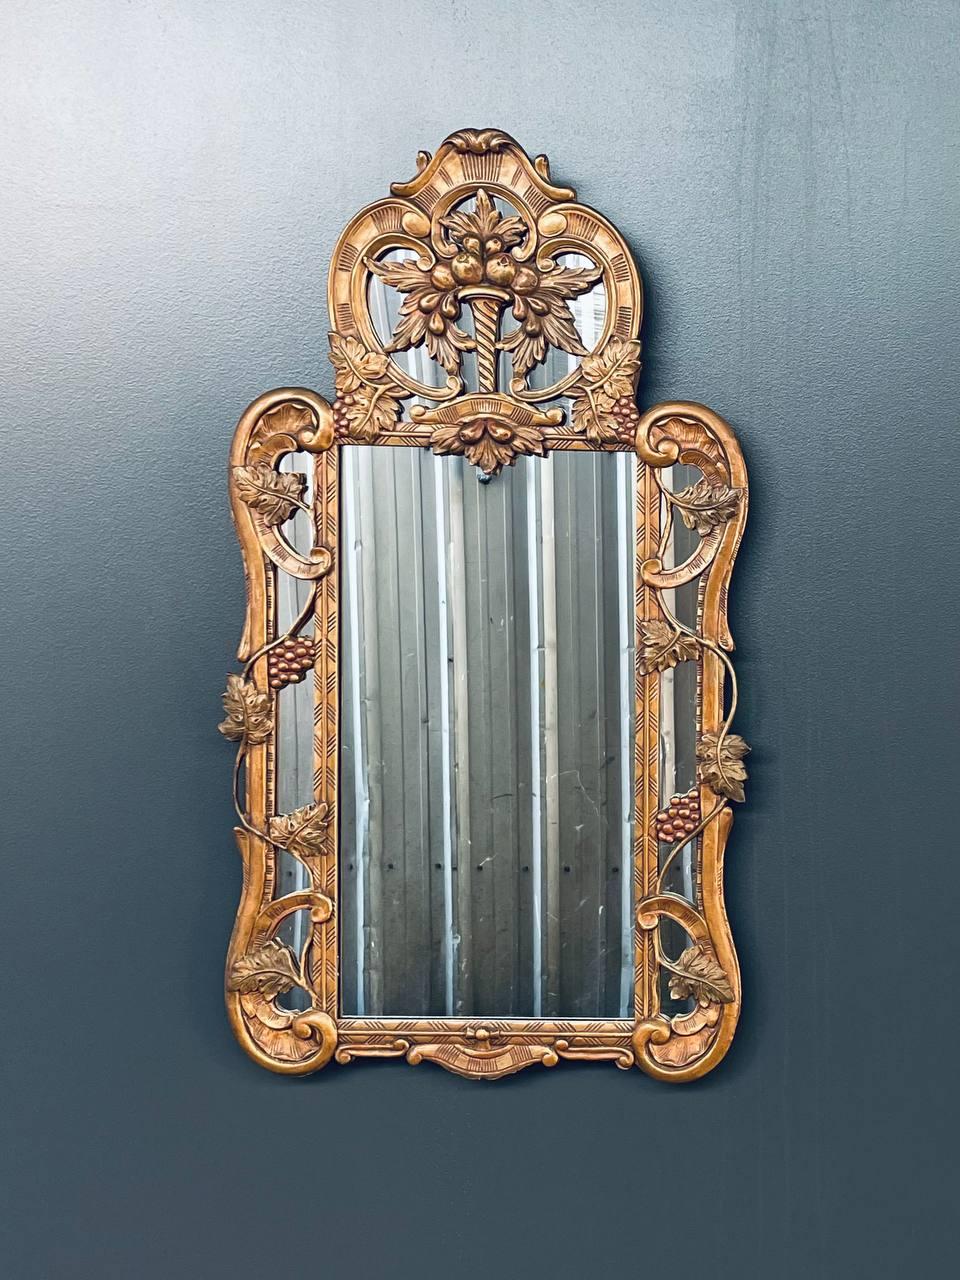 Materials: Carved Giltwood, Original Mirror

Style: Italian Baroque